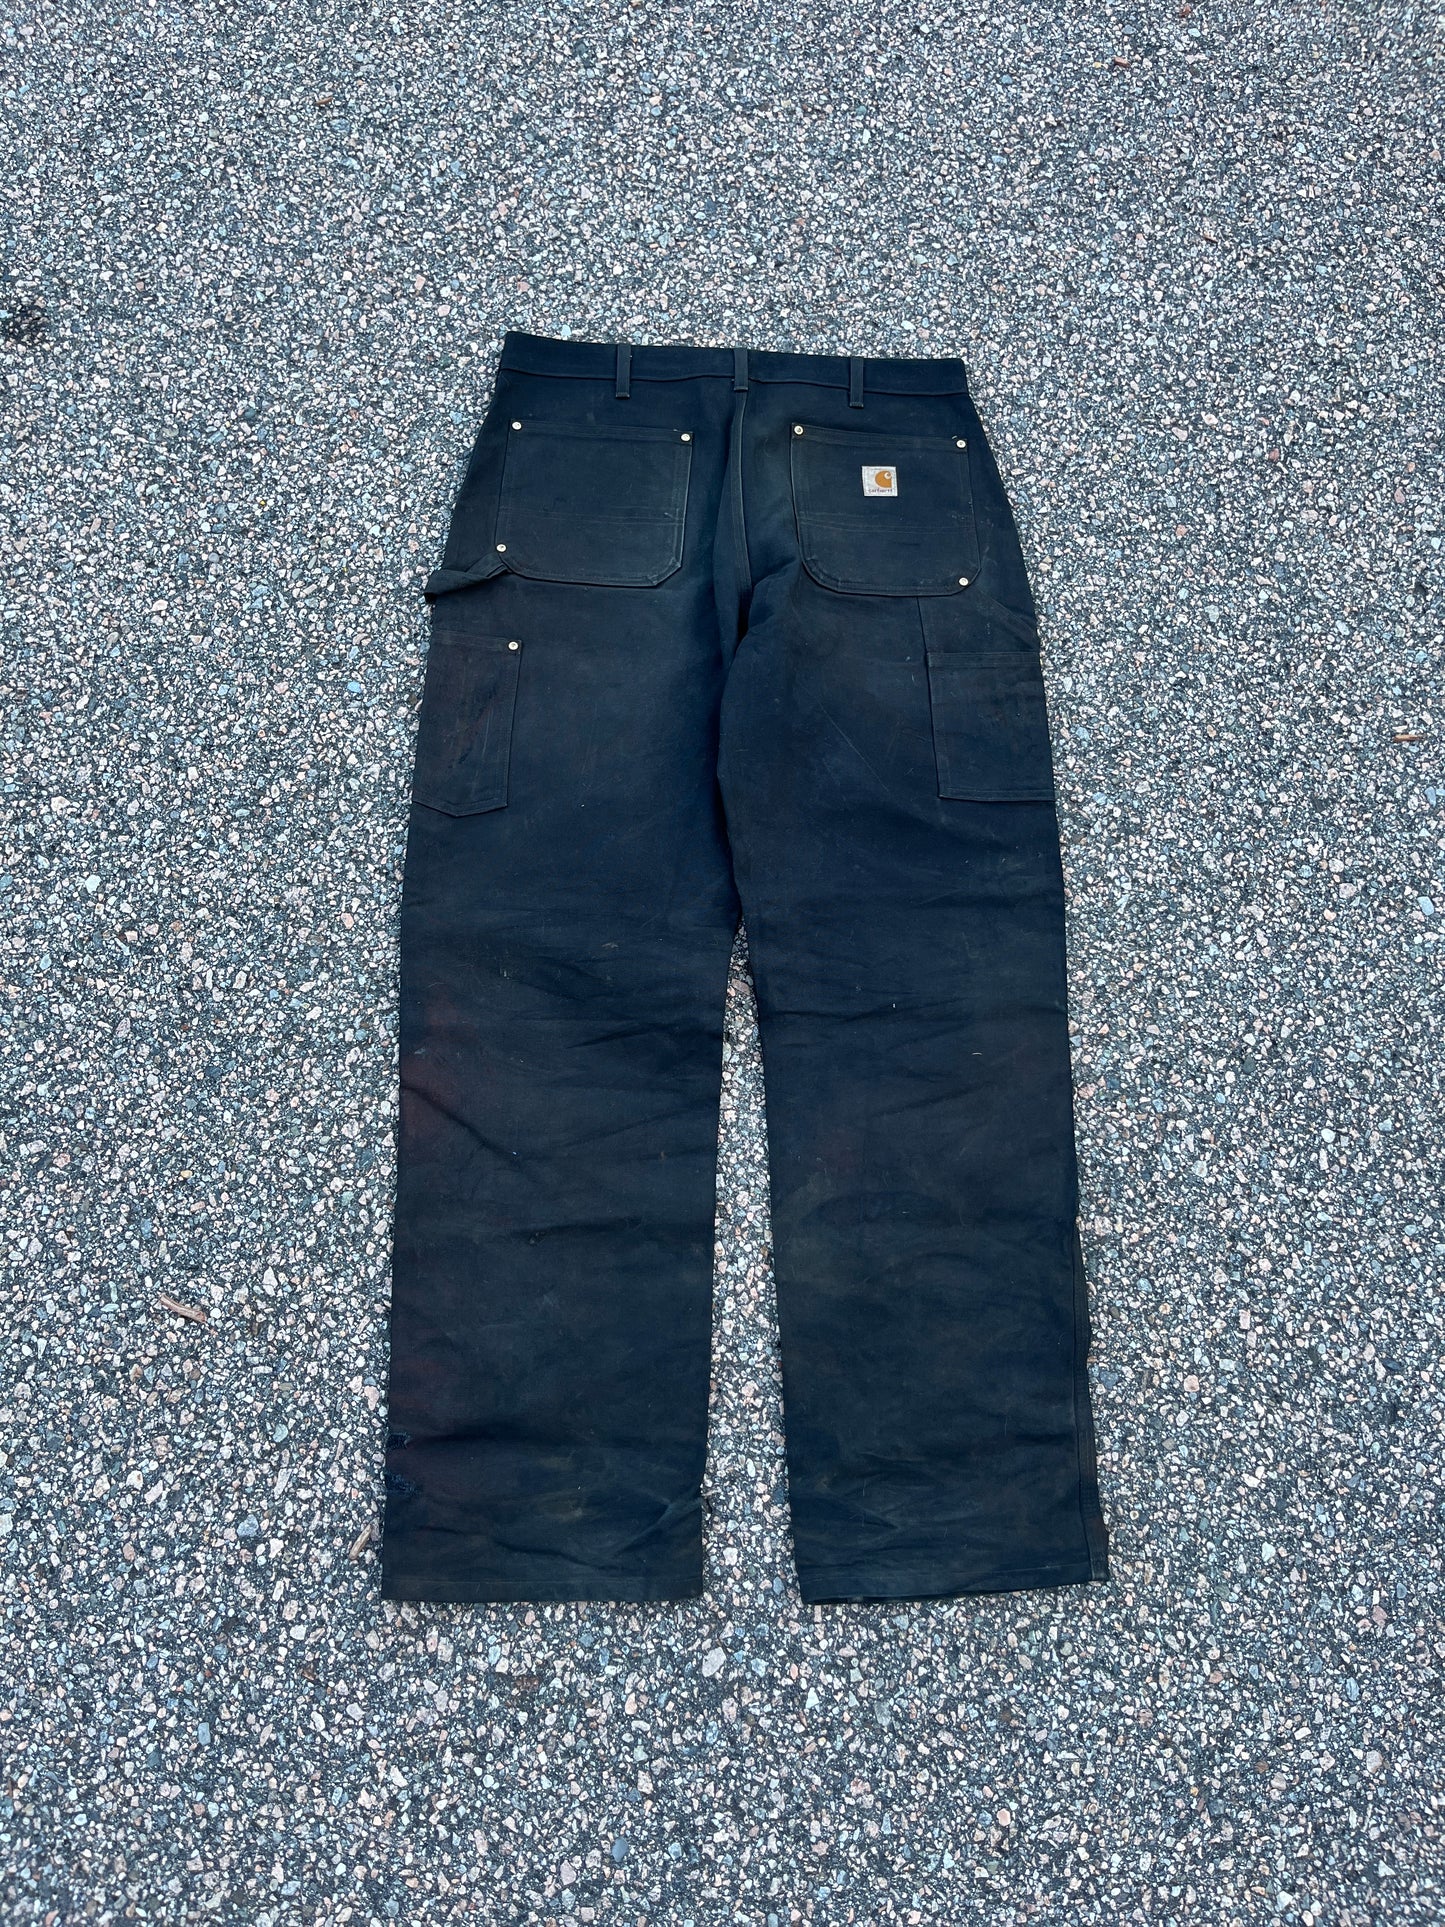 Faded Black Carhartt Double Knee Pants - 35 x 32